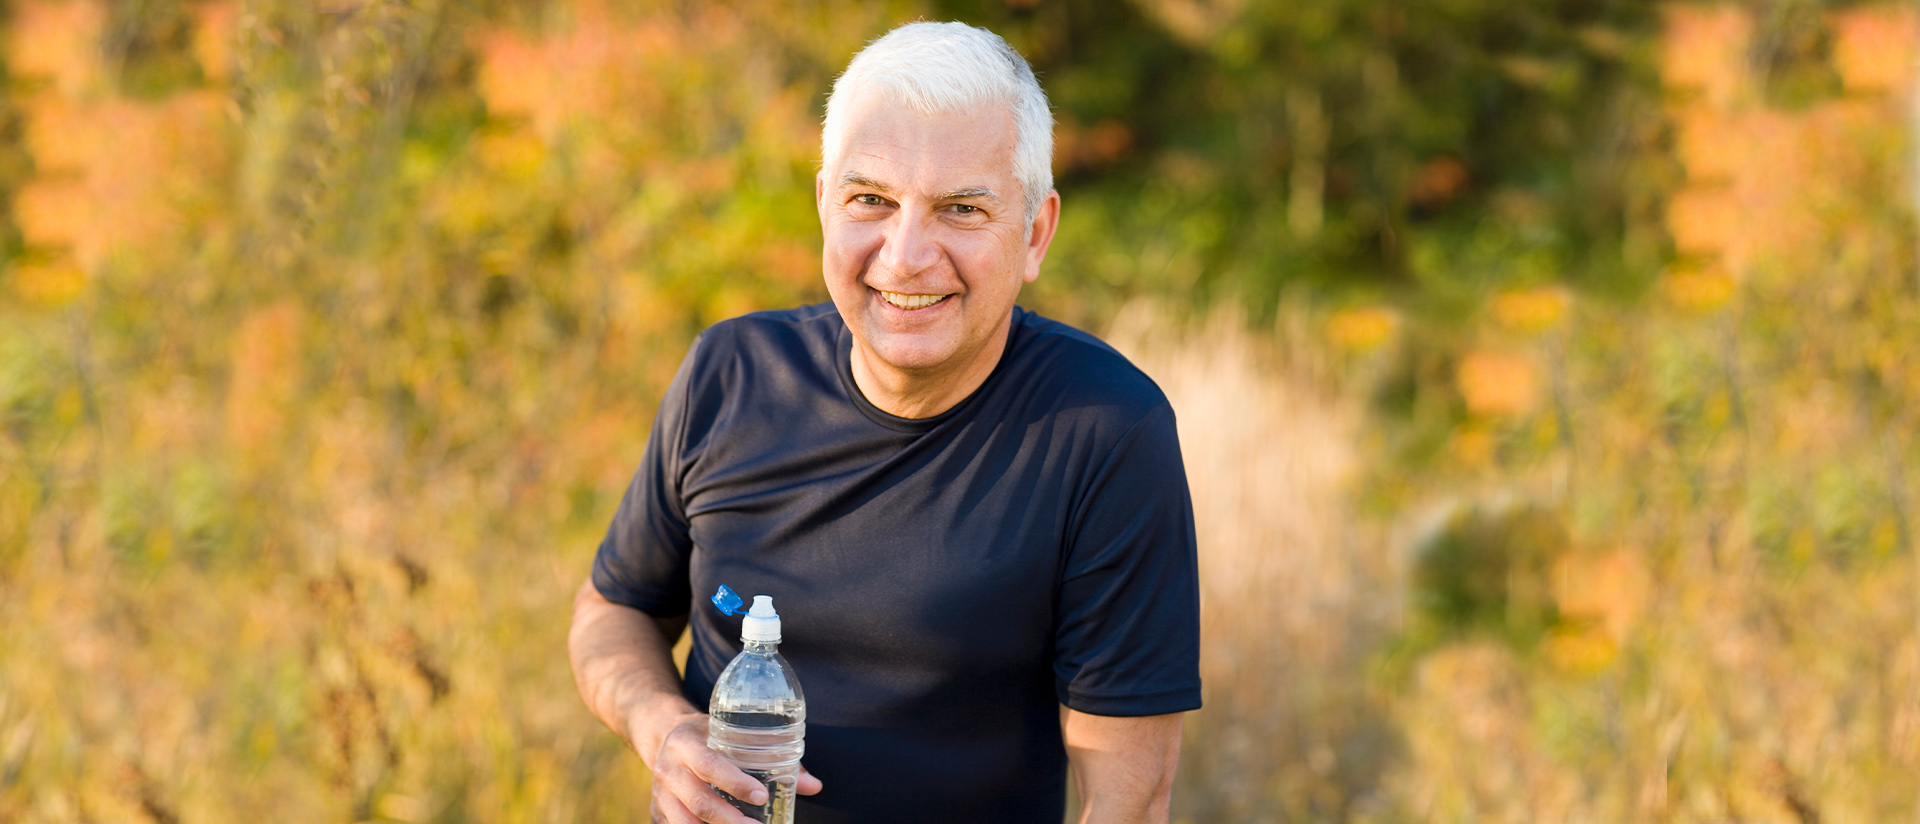 man holding water bottle